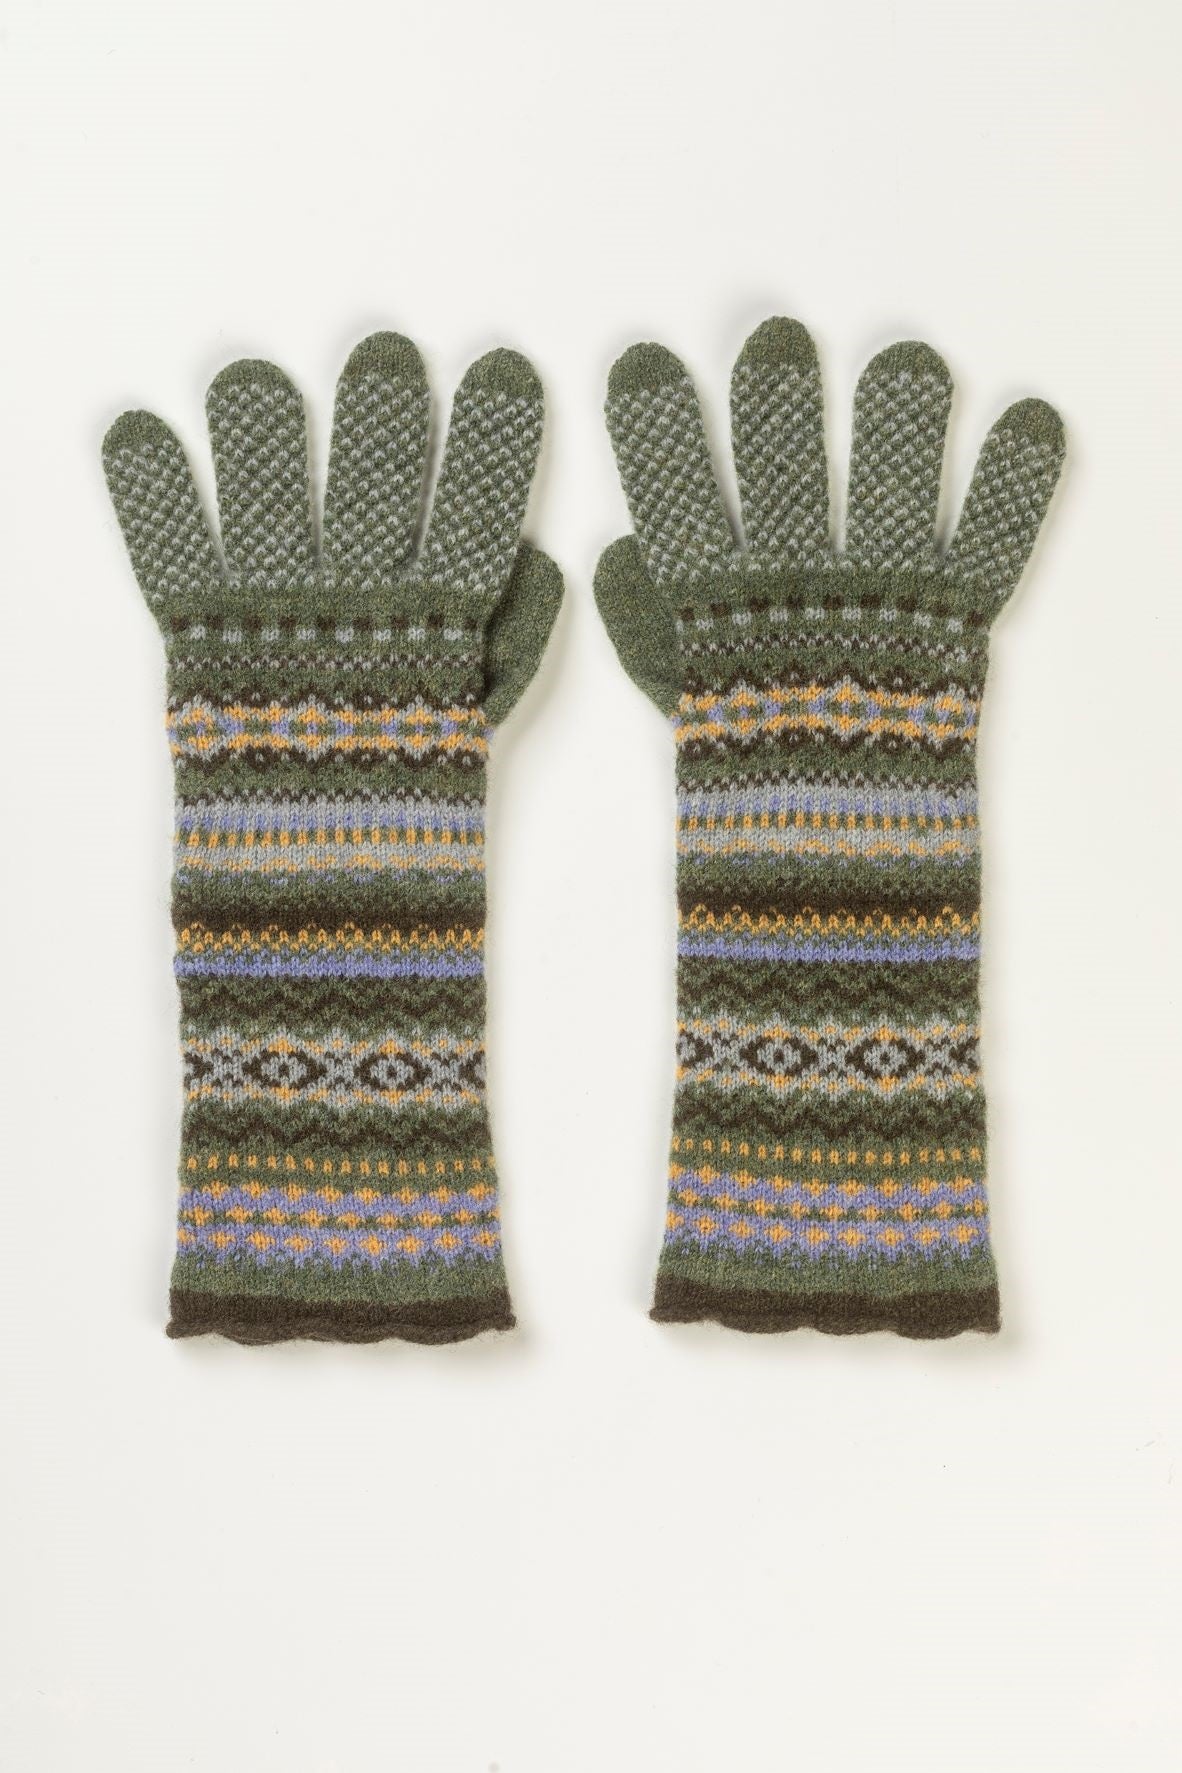 Alpine Gloves - Made in Scotland by Eribe Knitwear